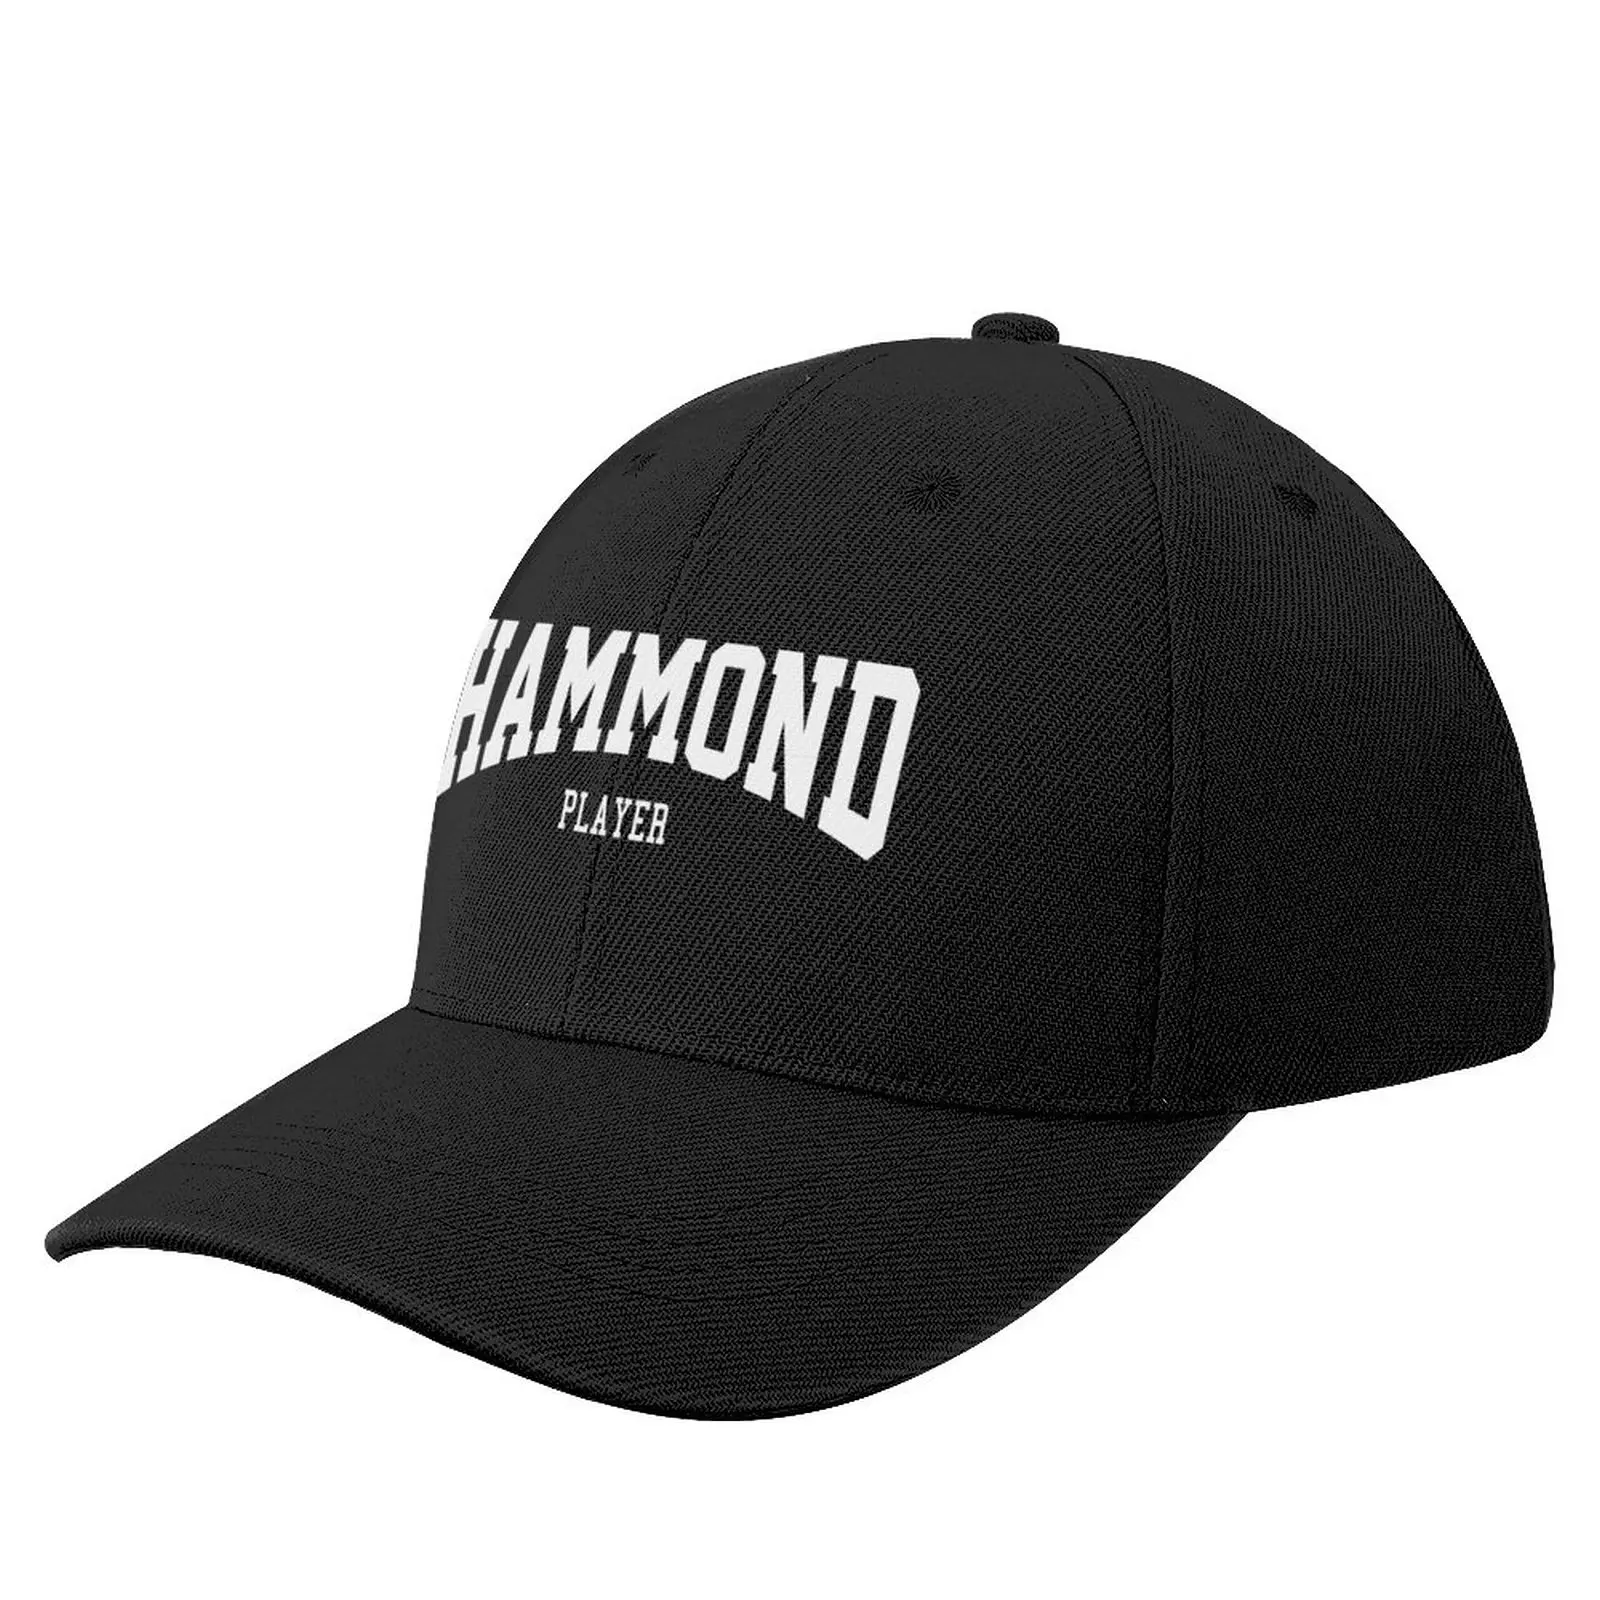 

Hammond Player Baseball Cap Big Size Hat fishing hat Bobble Hat Trucker Hats Women's Cap Men's